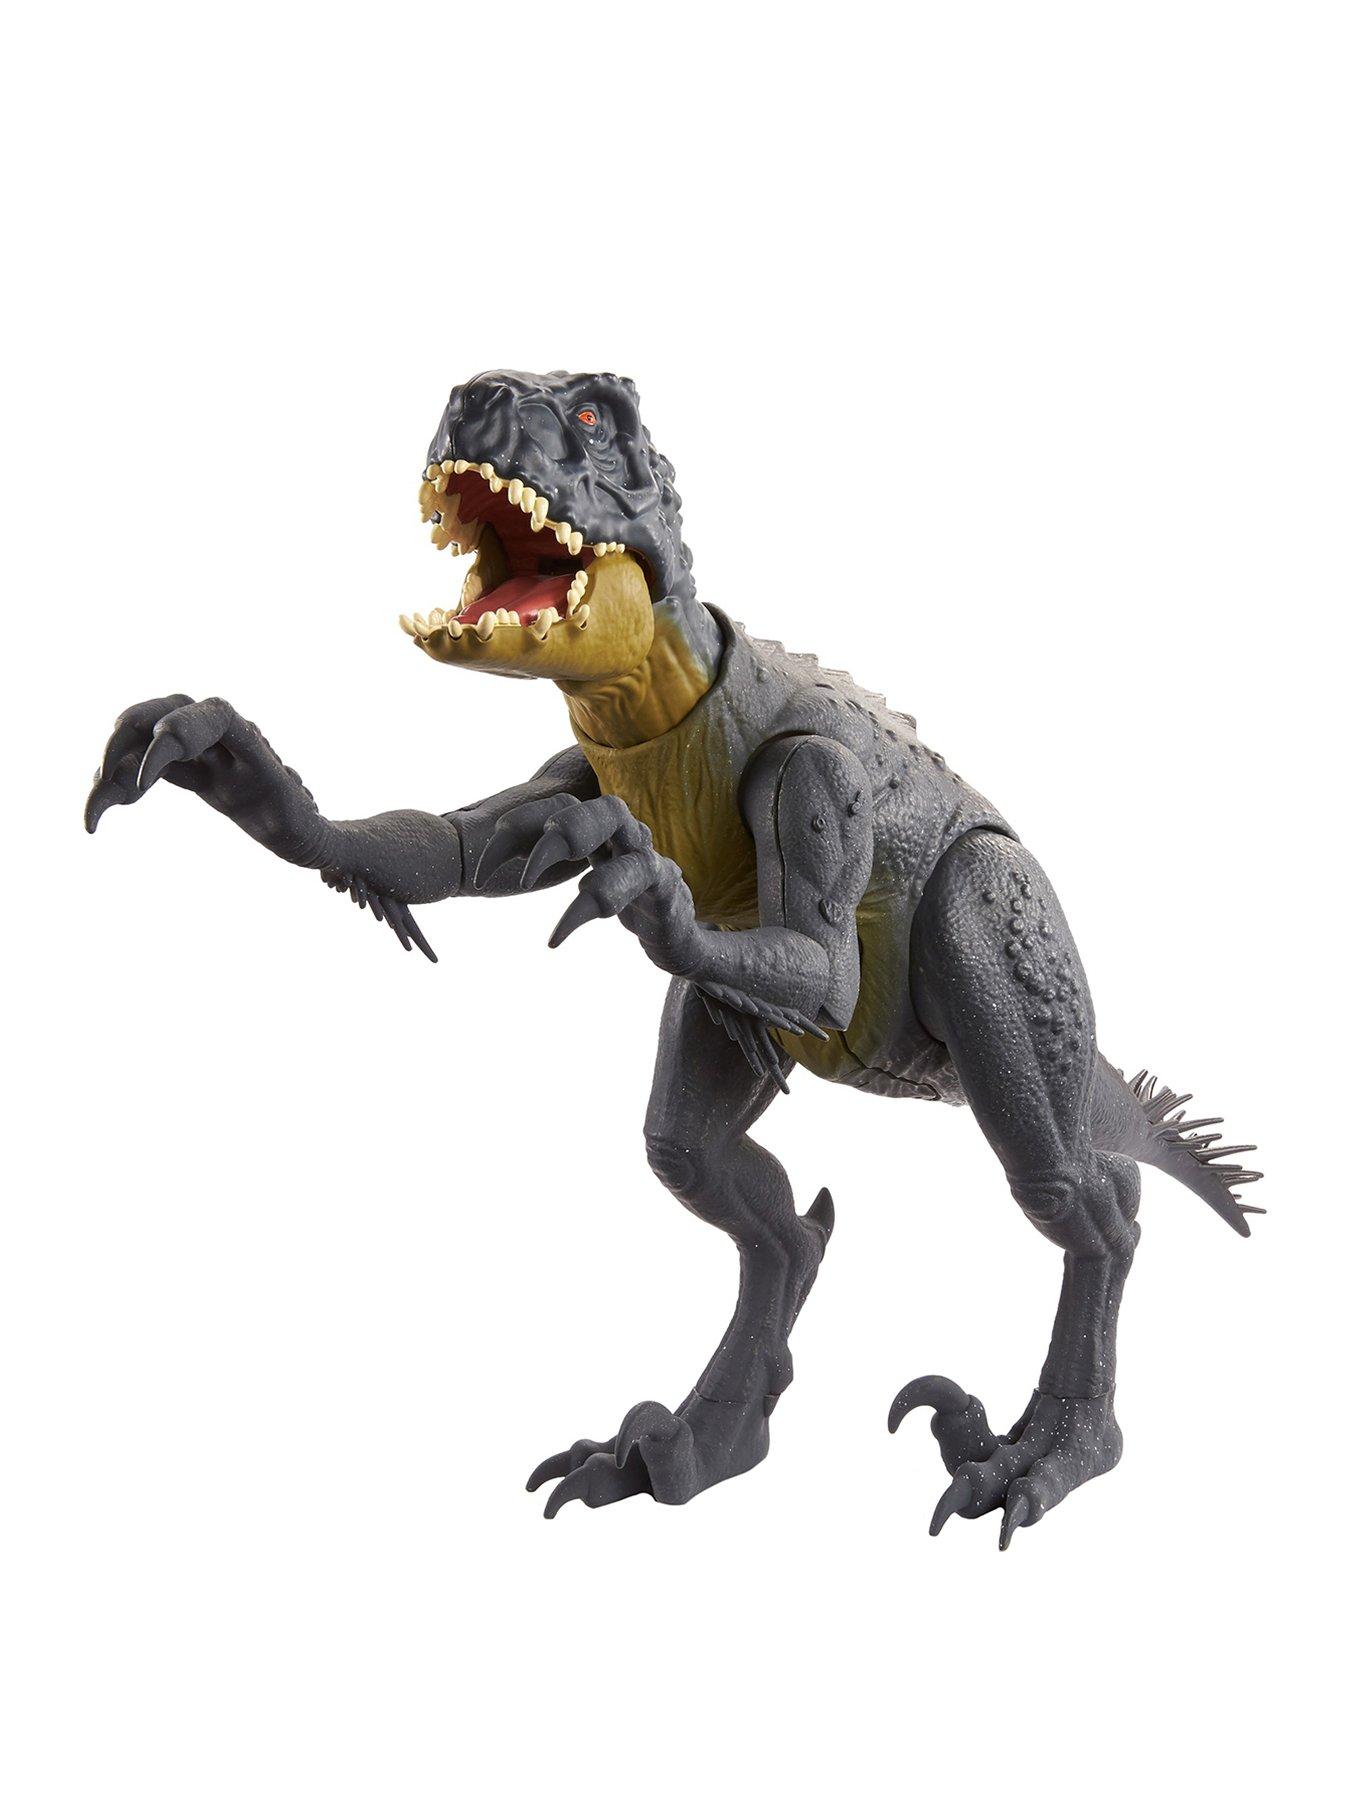 Details about   10" Jurassic Realistic Brachiosaurus Dinosaur Dino Figure Figurine Kids Toy Gift 